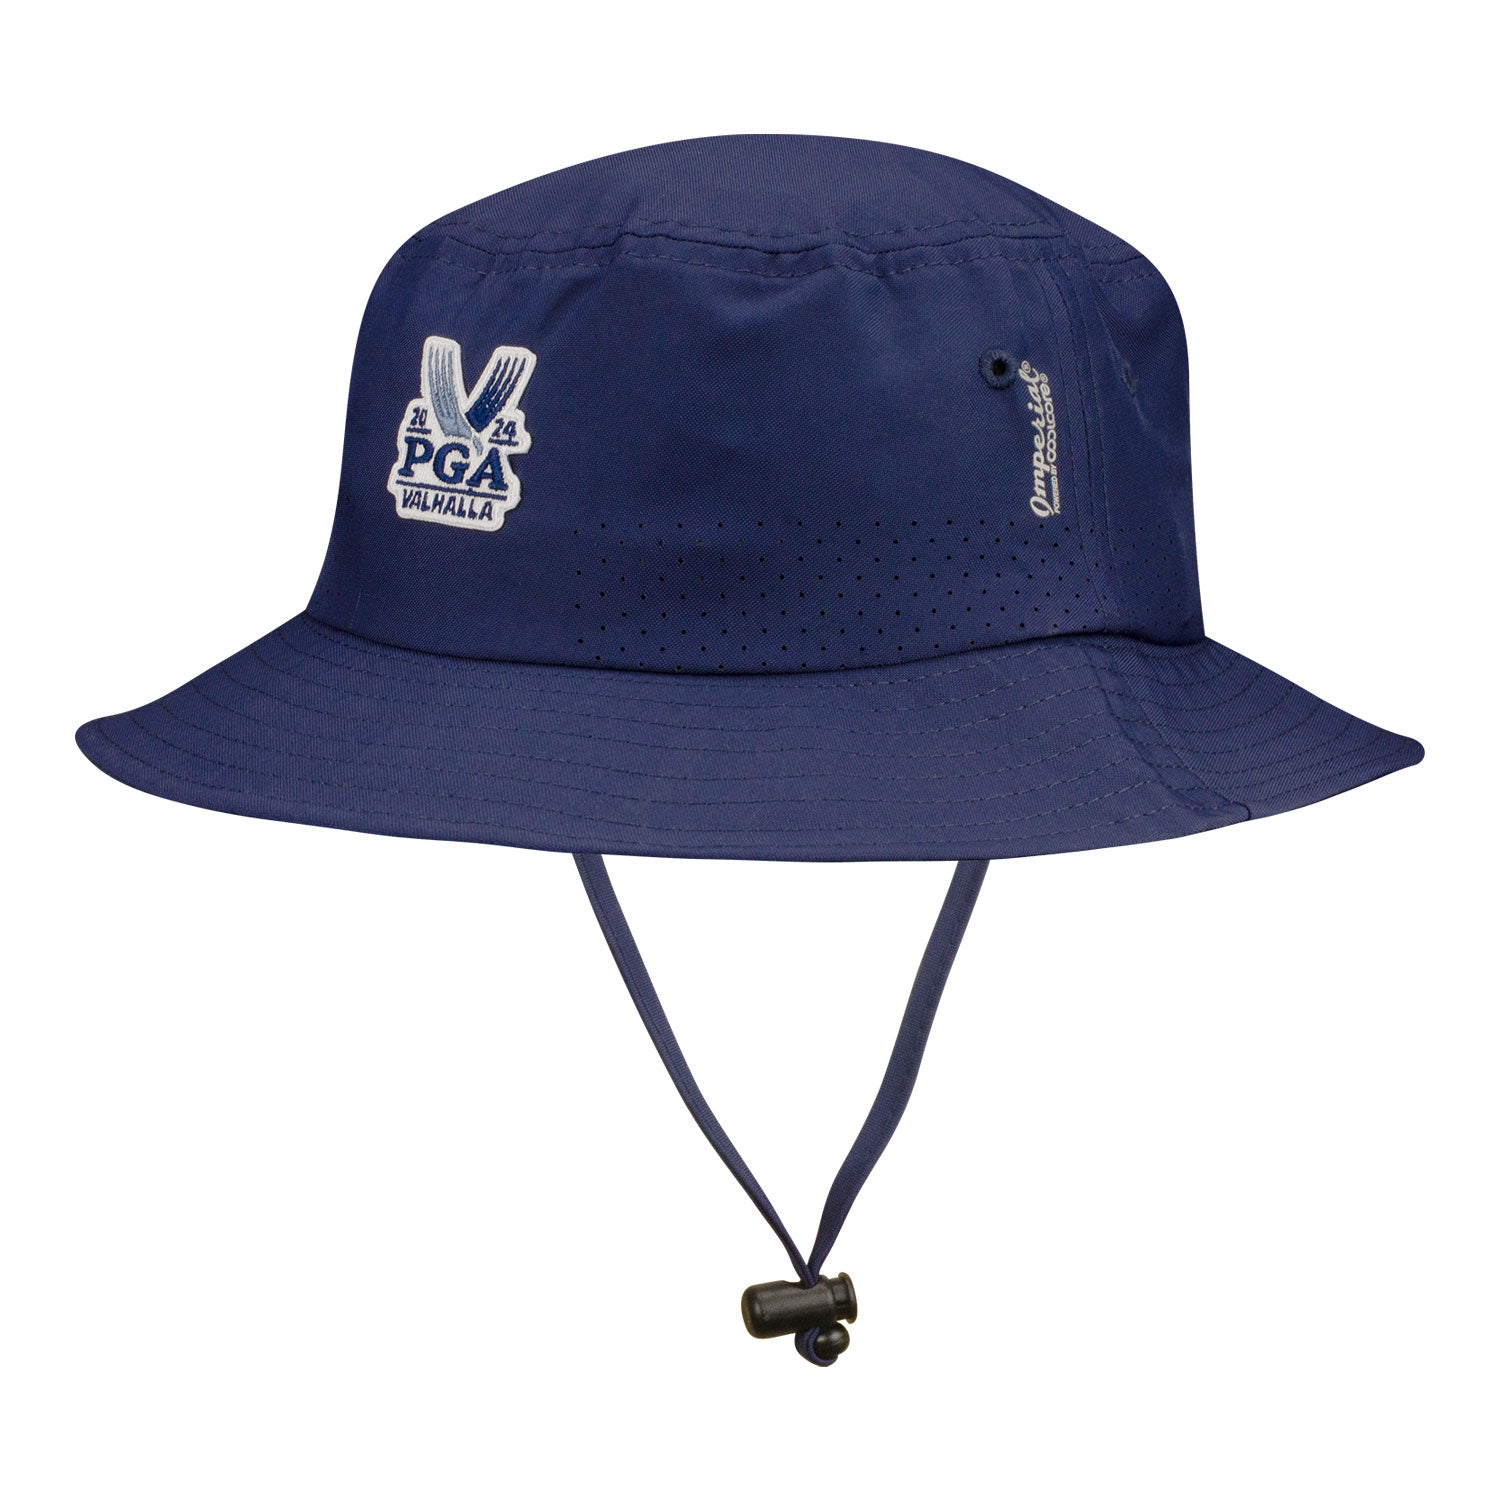 Mission Cooling Bucket Hat, Hats & Visors